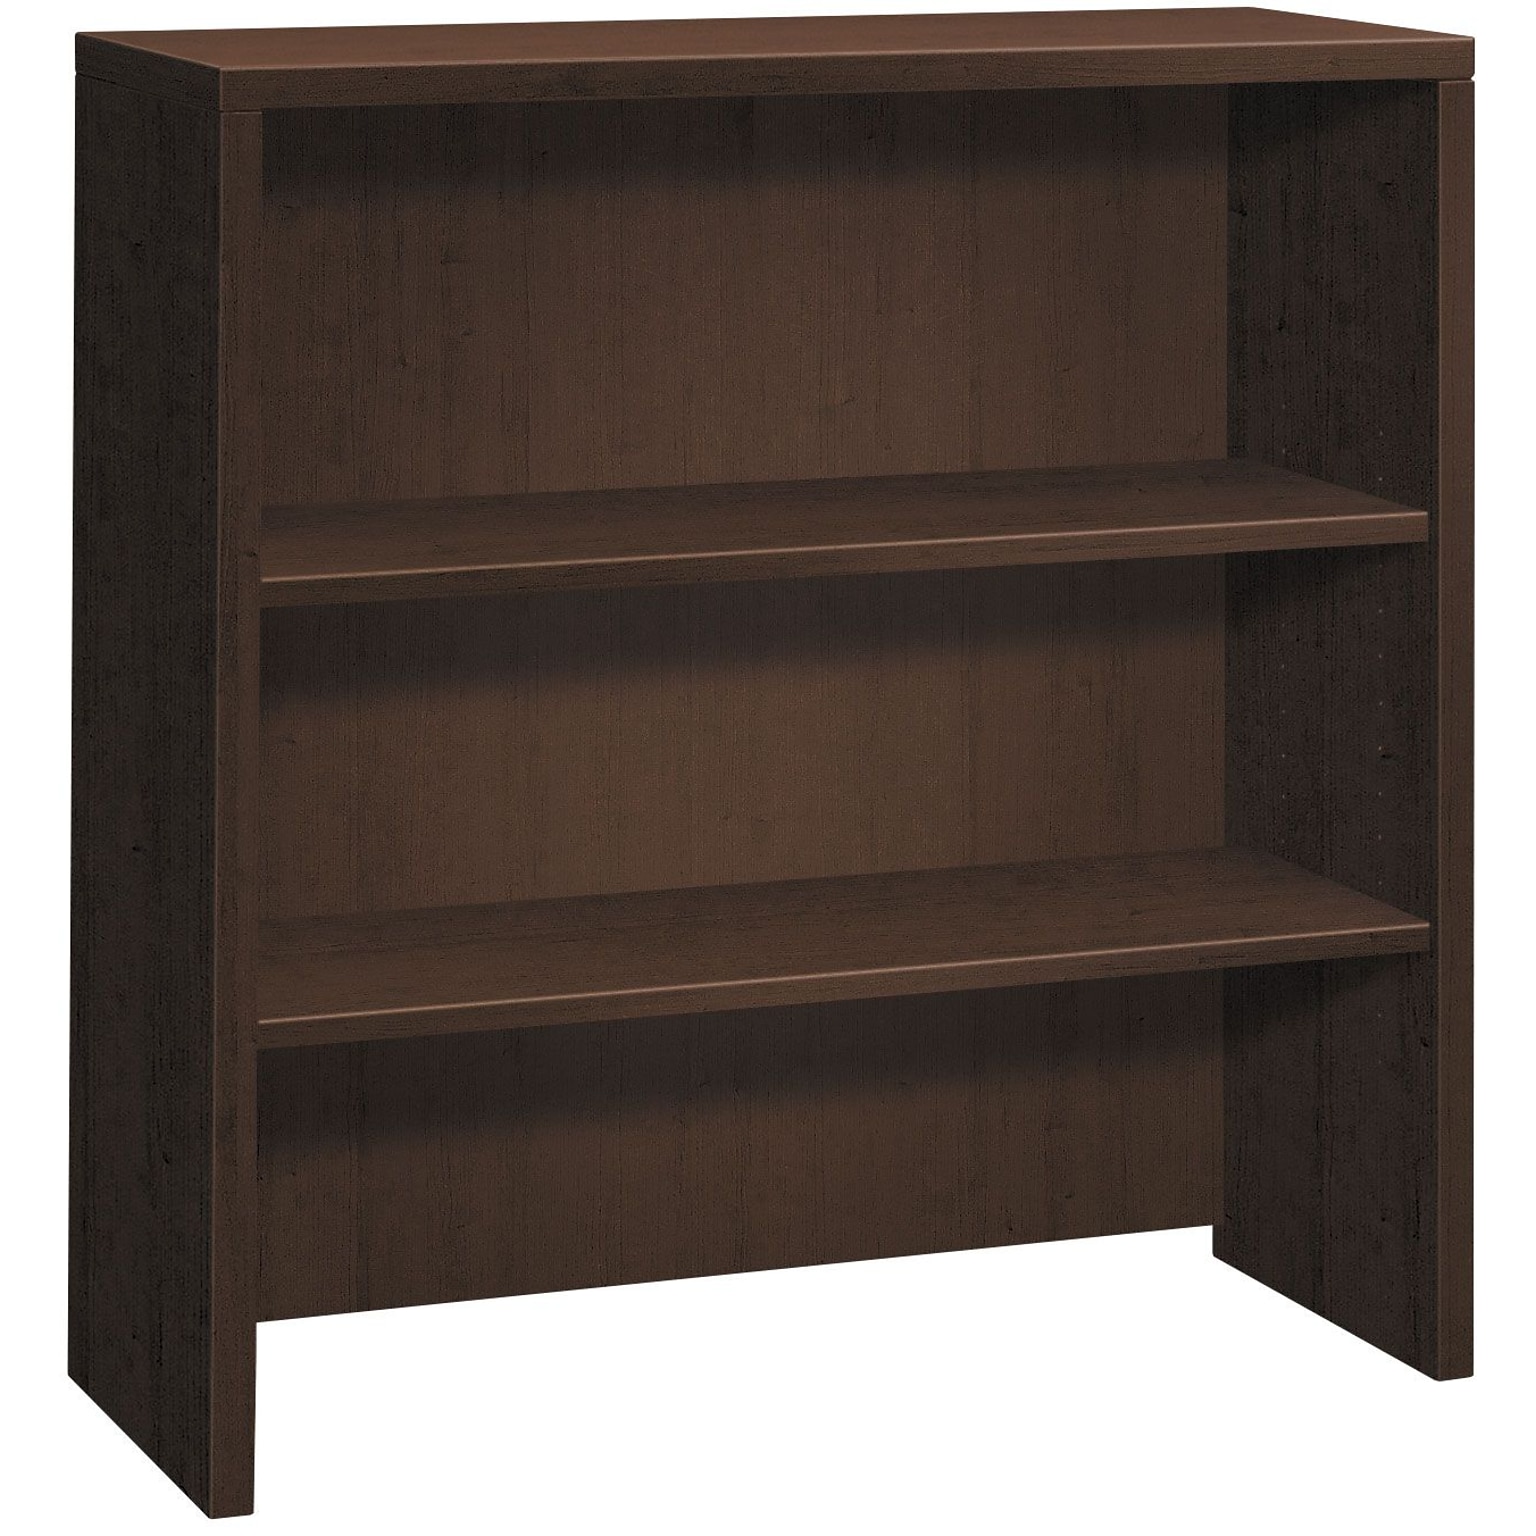 HON 10500 Series 2 Shelves 37-1/8H Bookcase Hutch, Mocha Finish (HON105292MOMO)